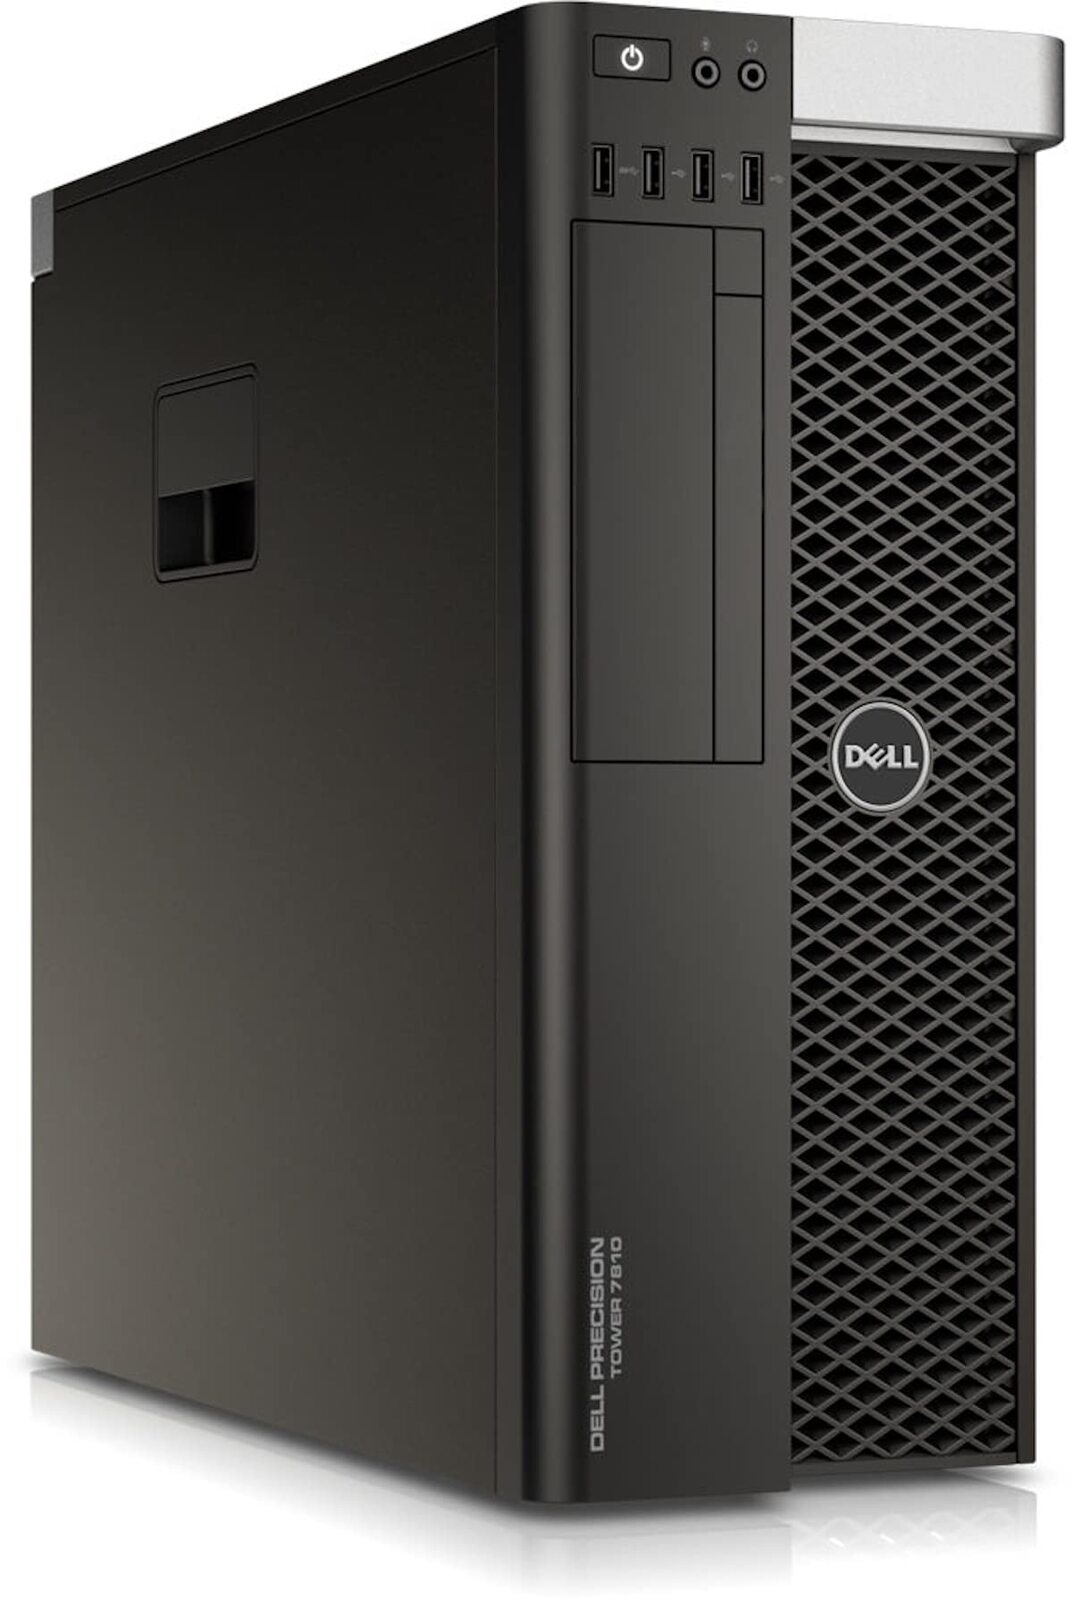 Buy Dell Precision Tower 7810 Intel Xeon E5-2630 V4 2.20GHz 16GB RAM 1TB  HDD Win 10 ACT